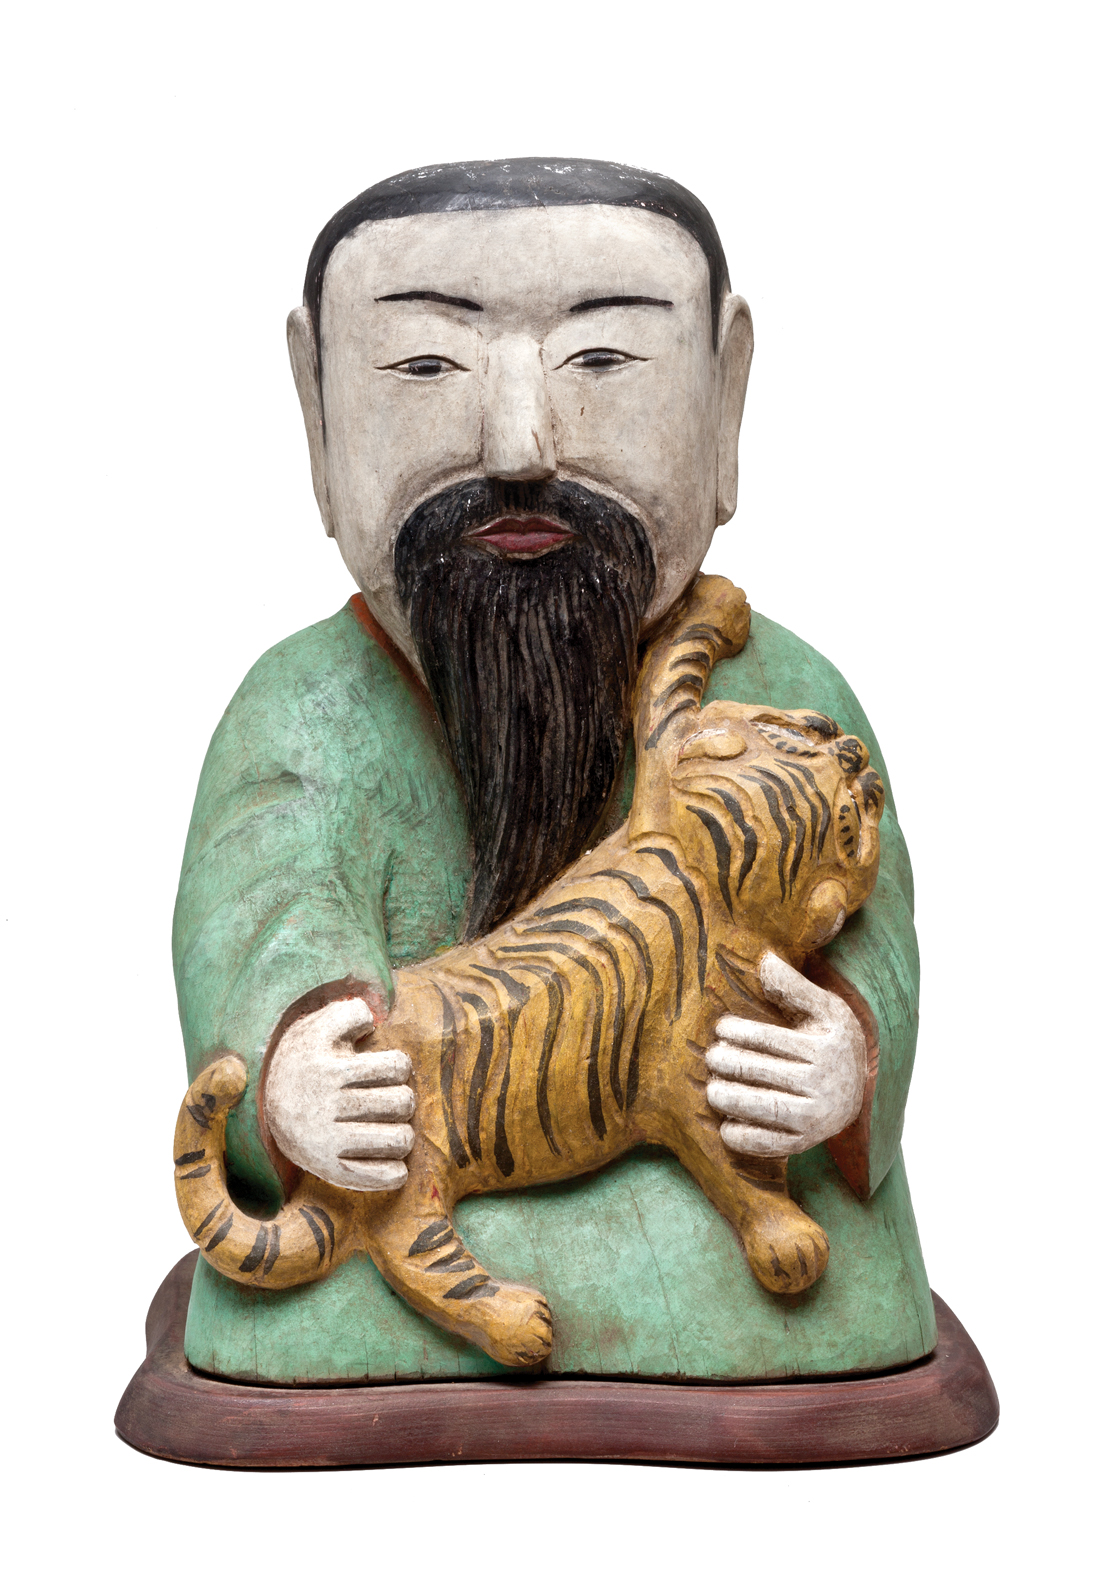 Mountain Spirit and Tiger, a Korean sculpture